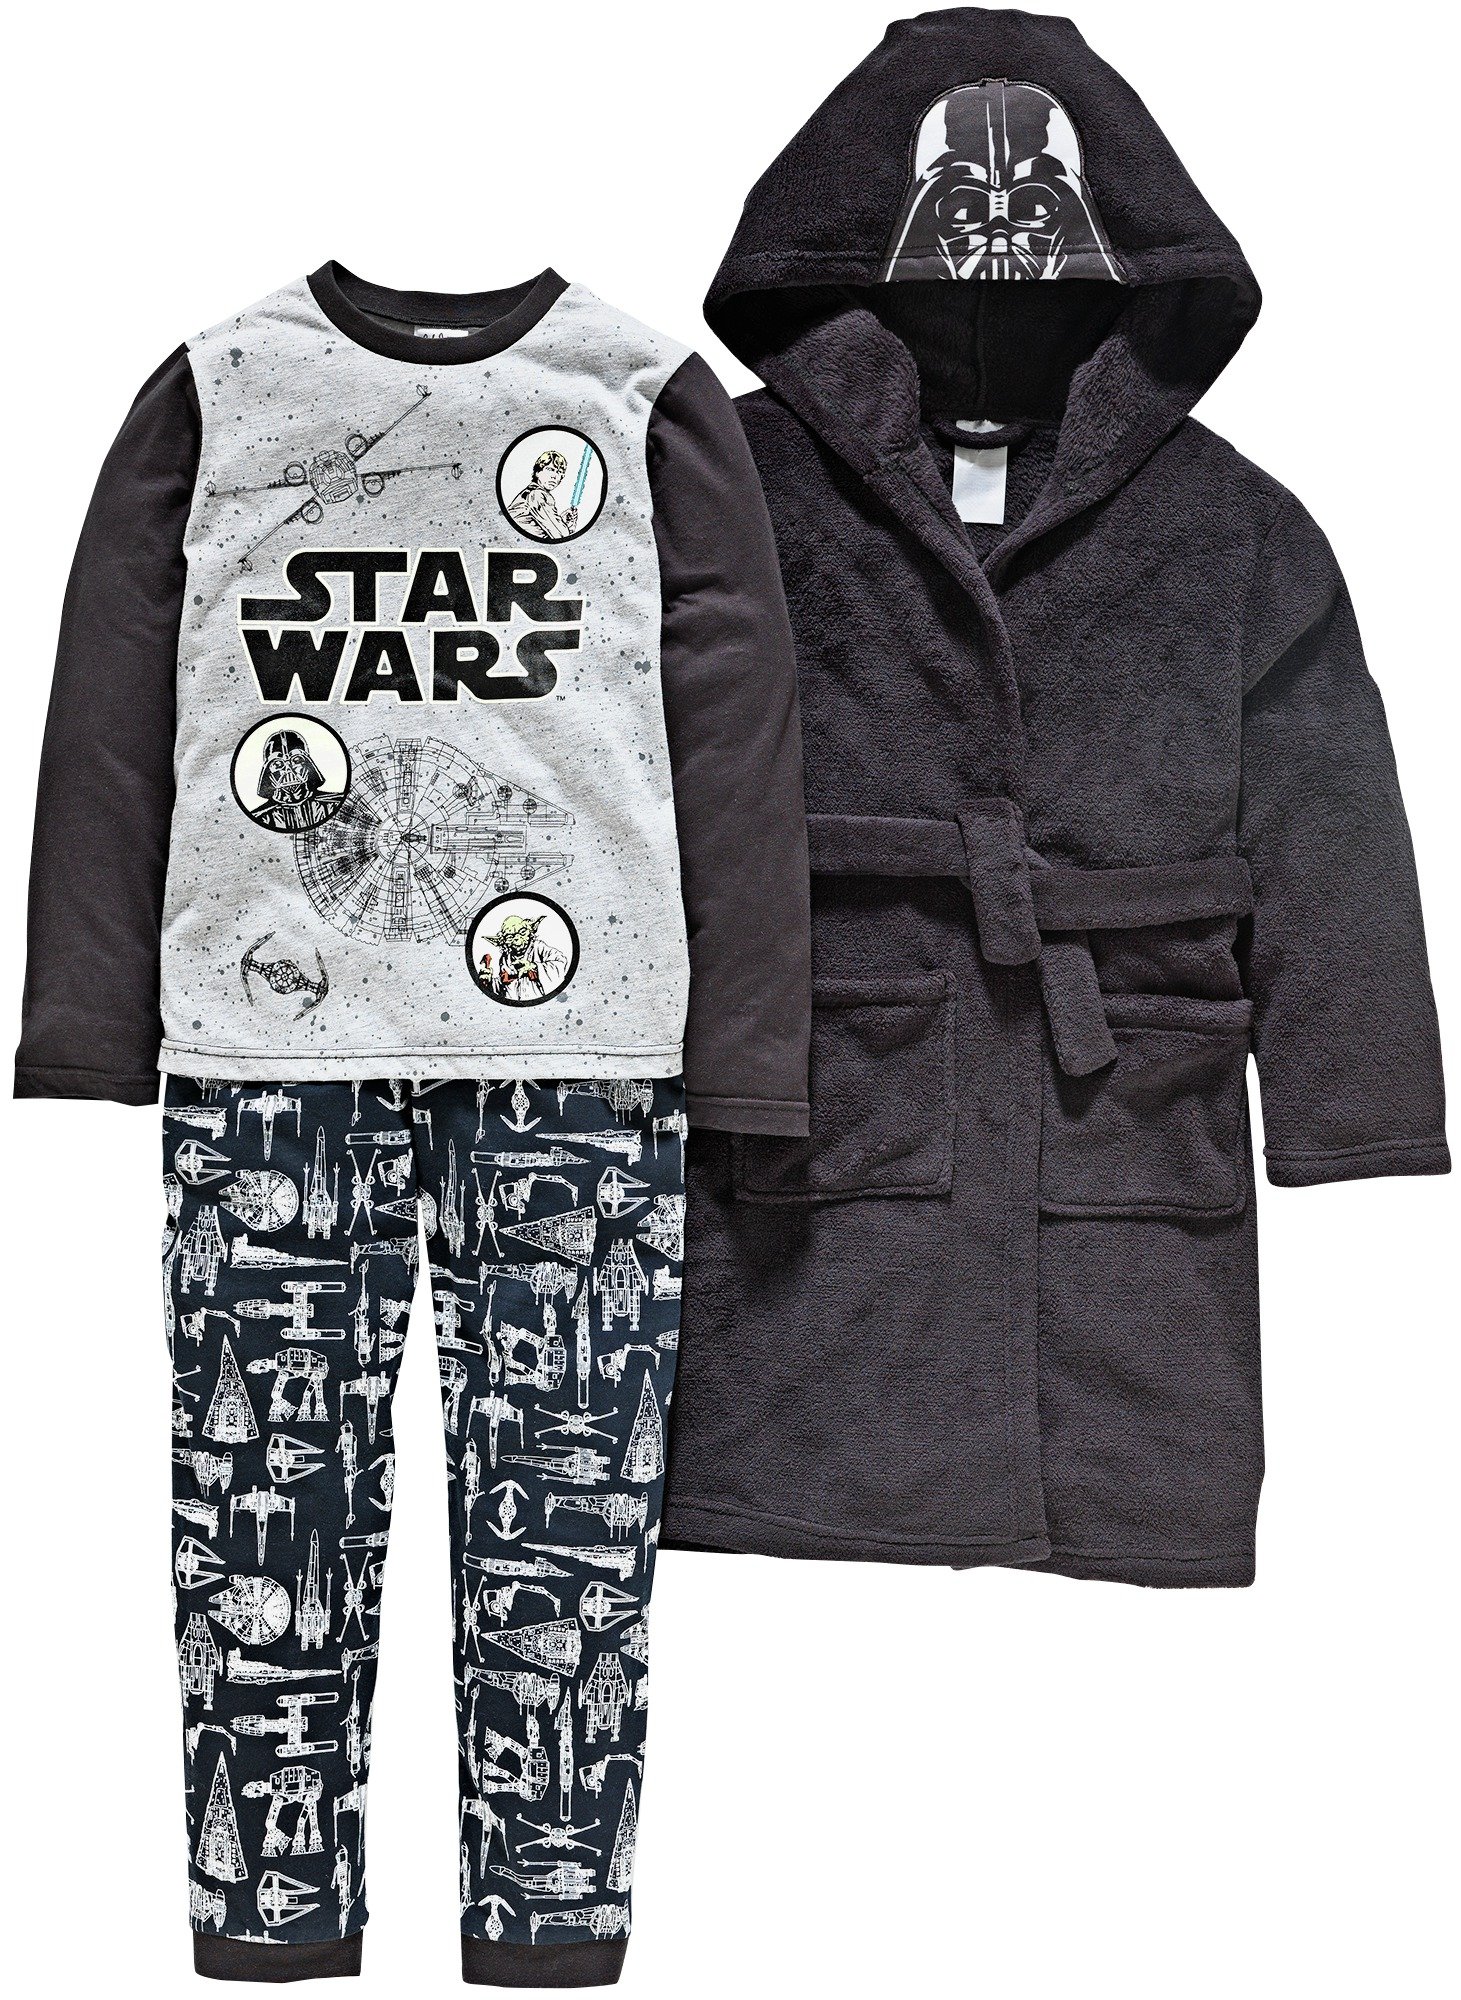 Star Wars Nightwear Set - 7-8 Years